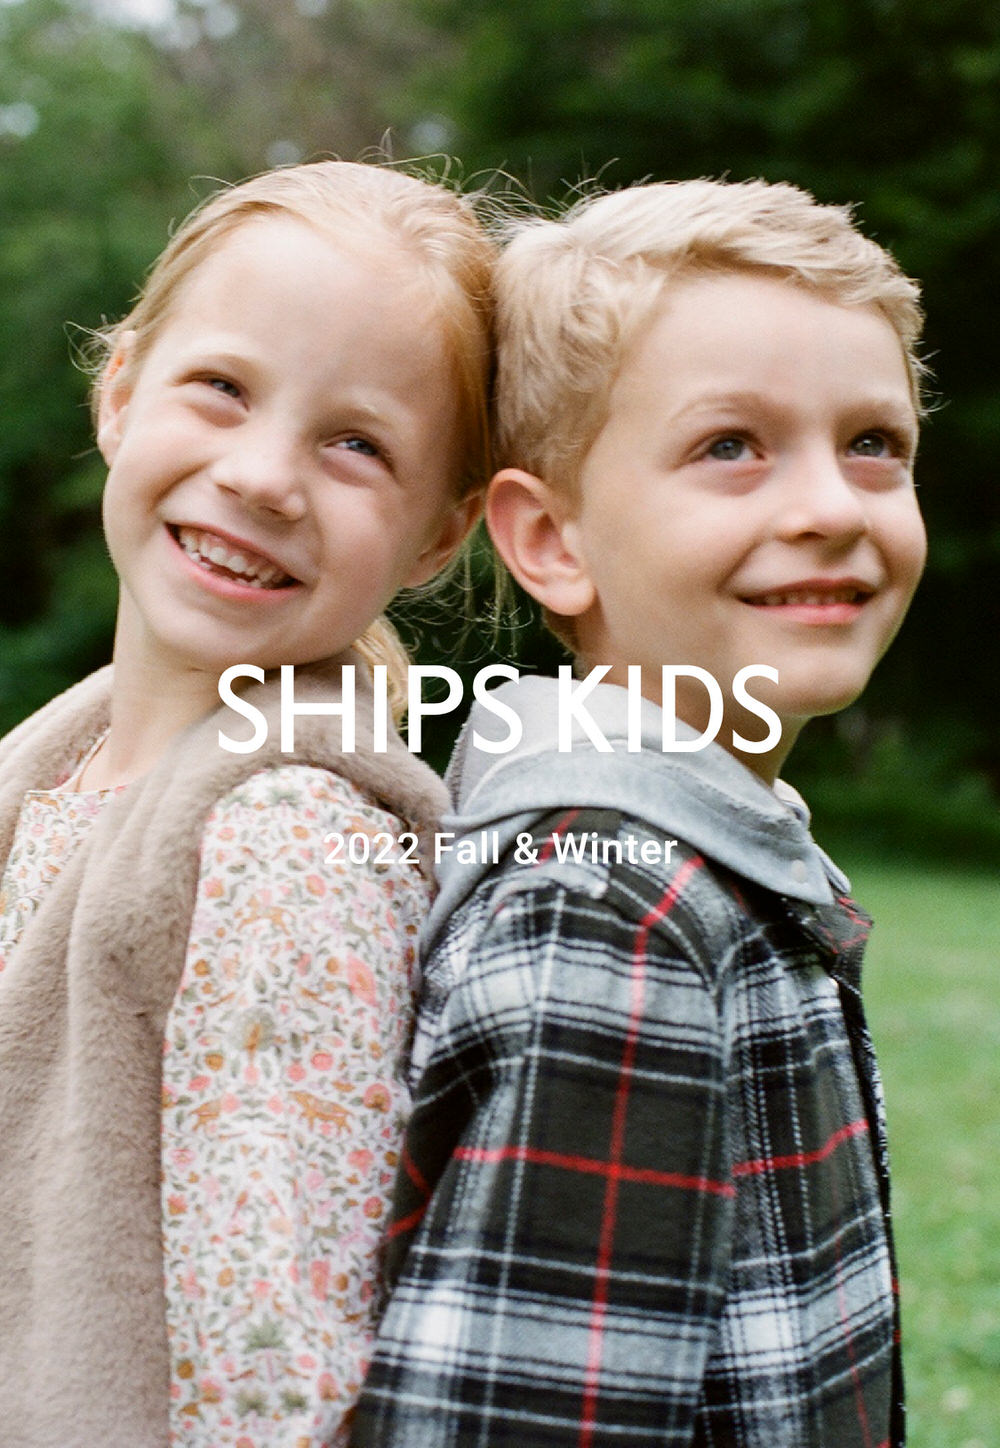 SHIPS KIDS 2022 Fall & Winter